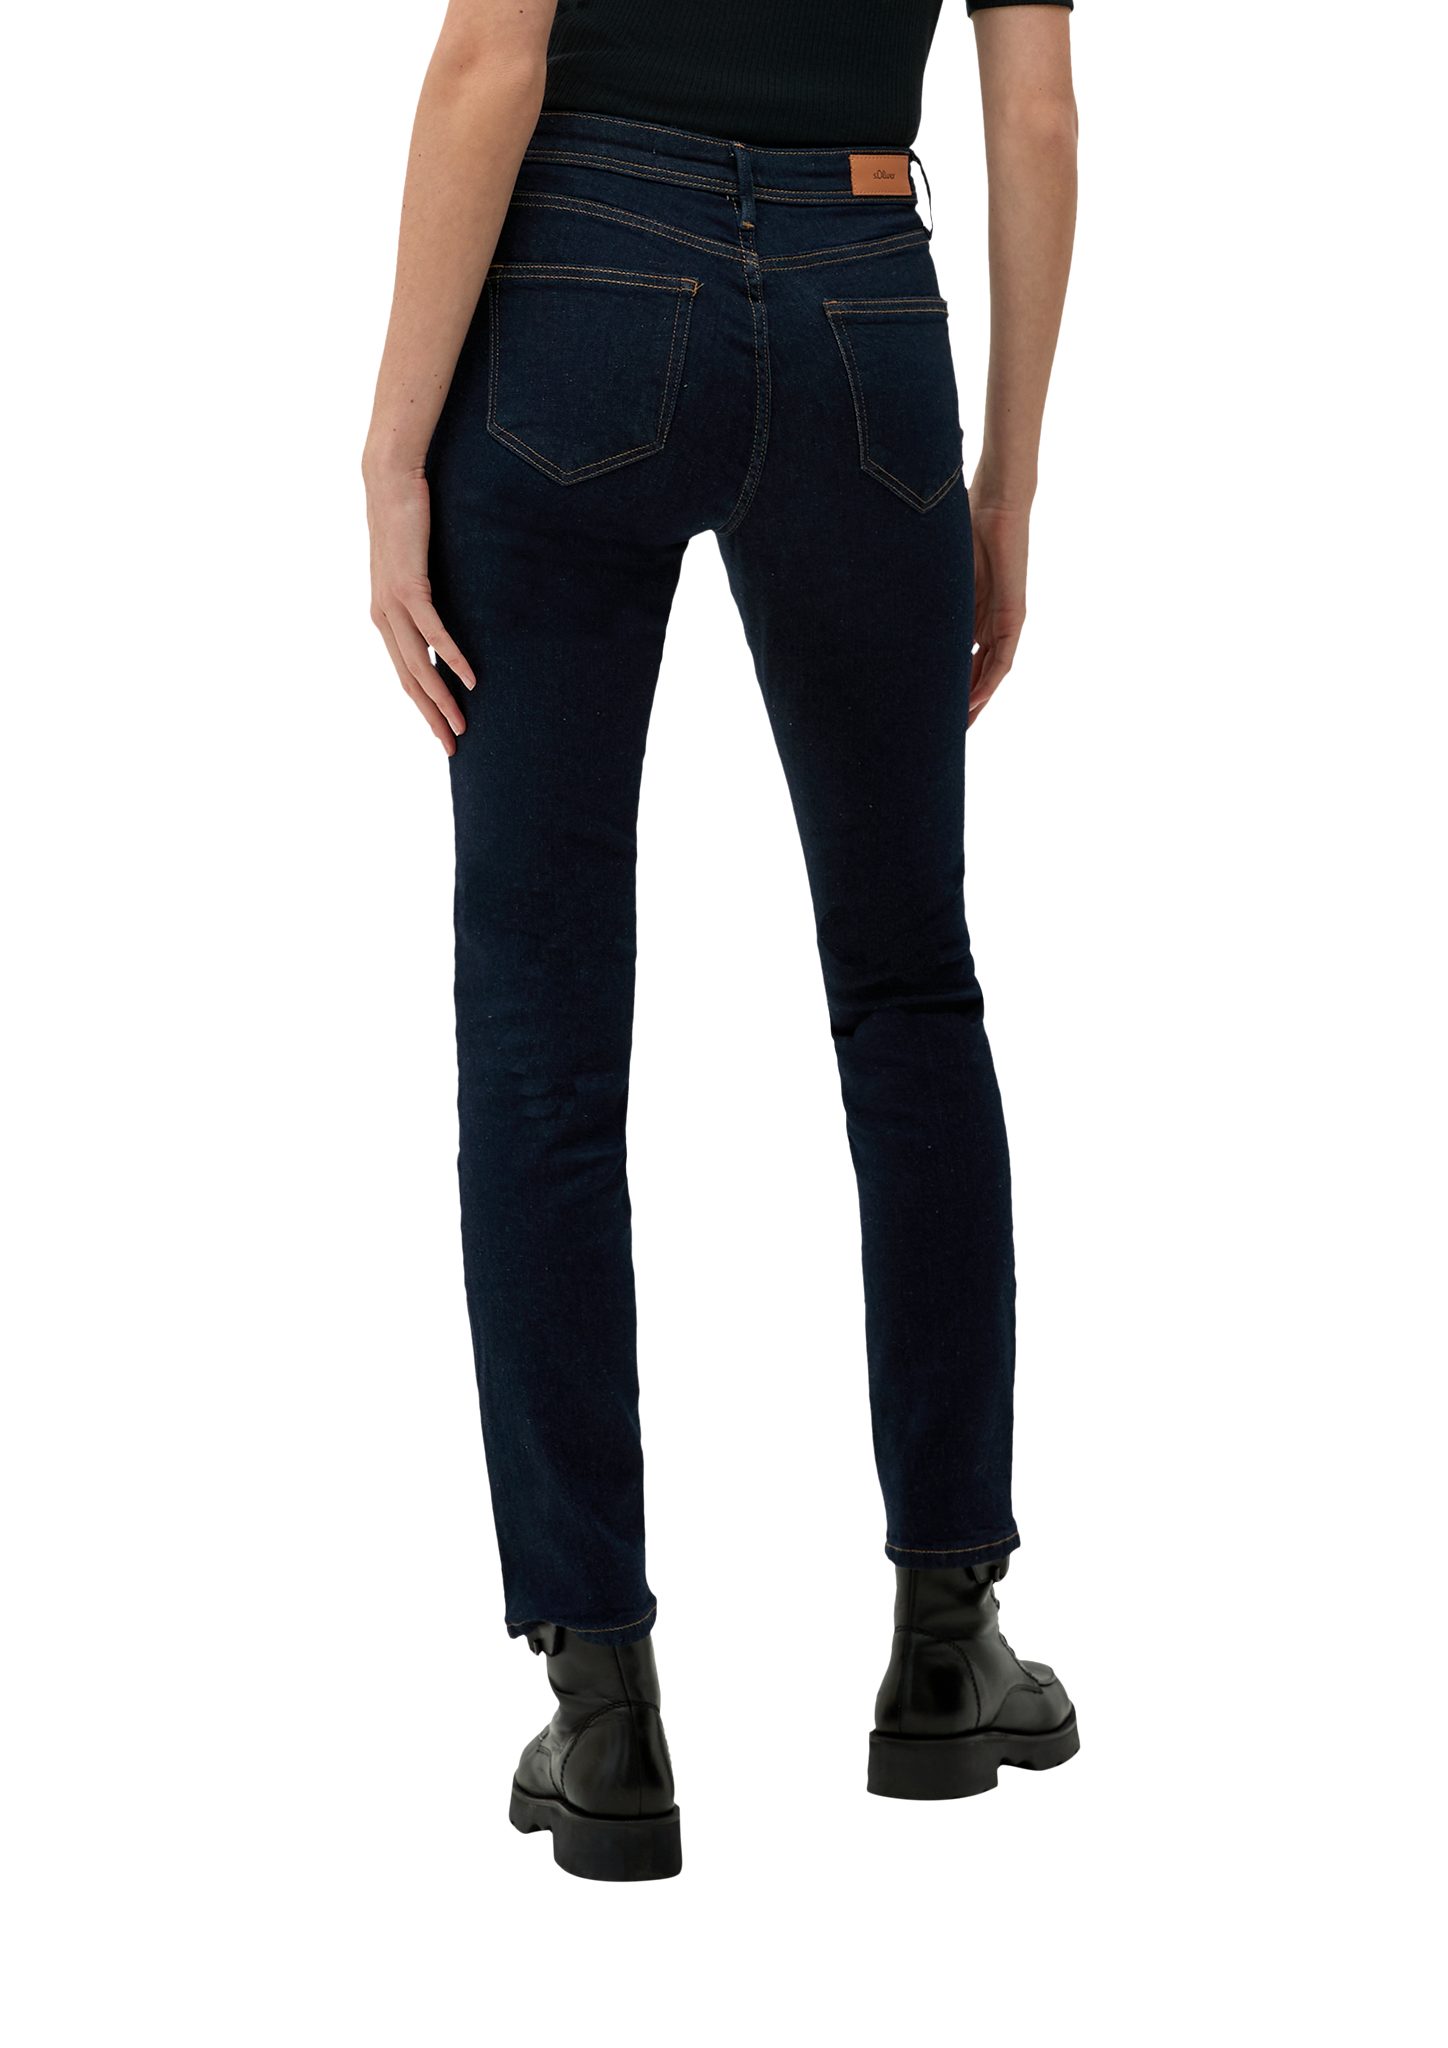 Slim / / 5-Pocket-Jeans tiefblau Leg Slim Fit Betsy Waschung Jeans s.Oliver Rise Mid /